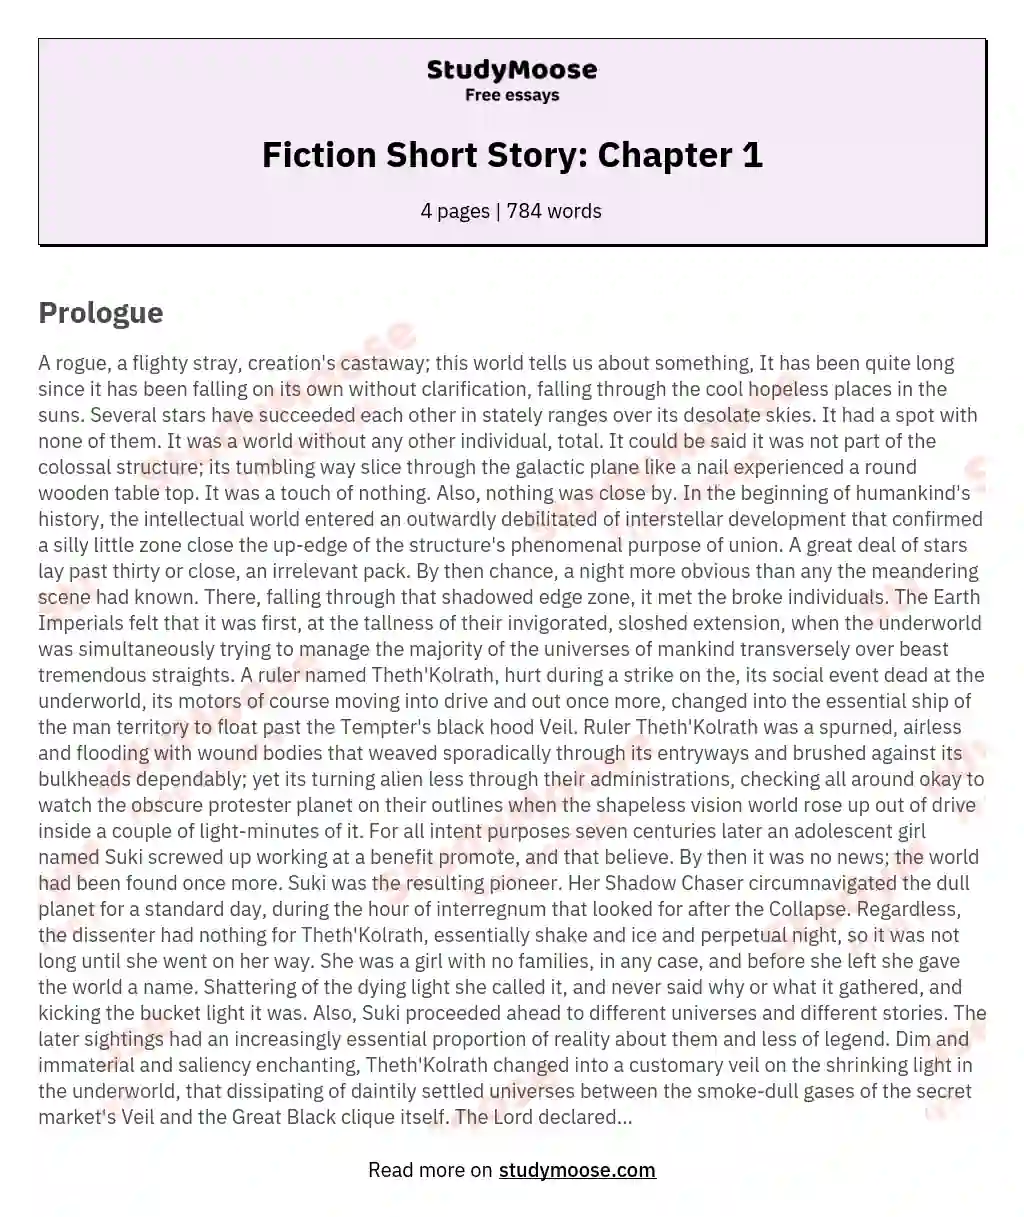 Fiction Short Story: Chapter 1 essay